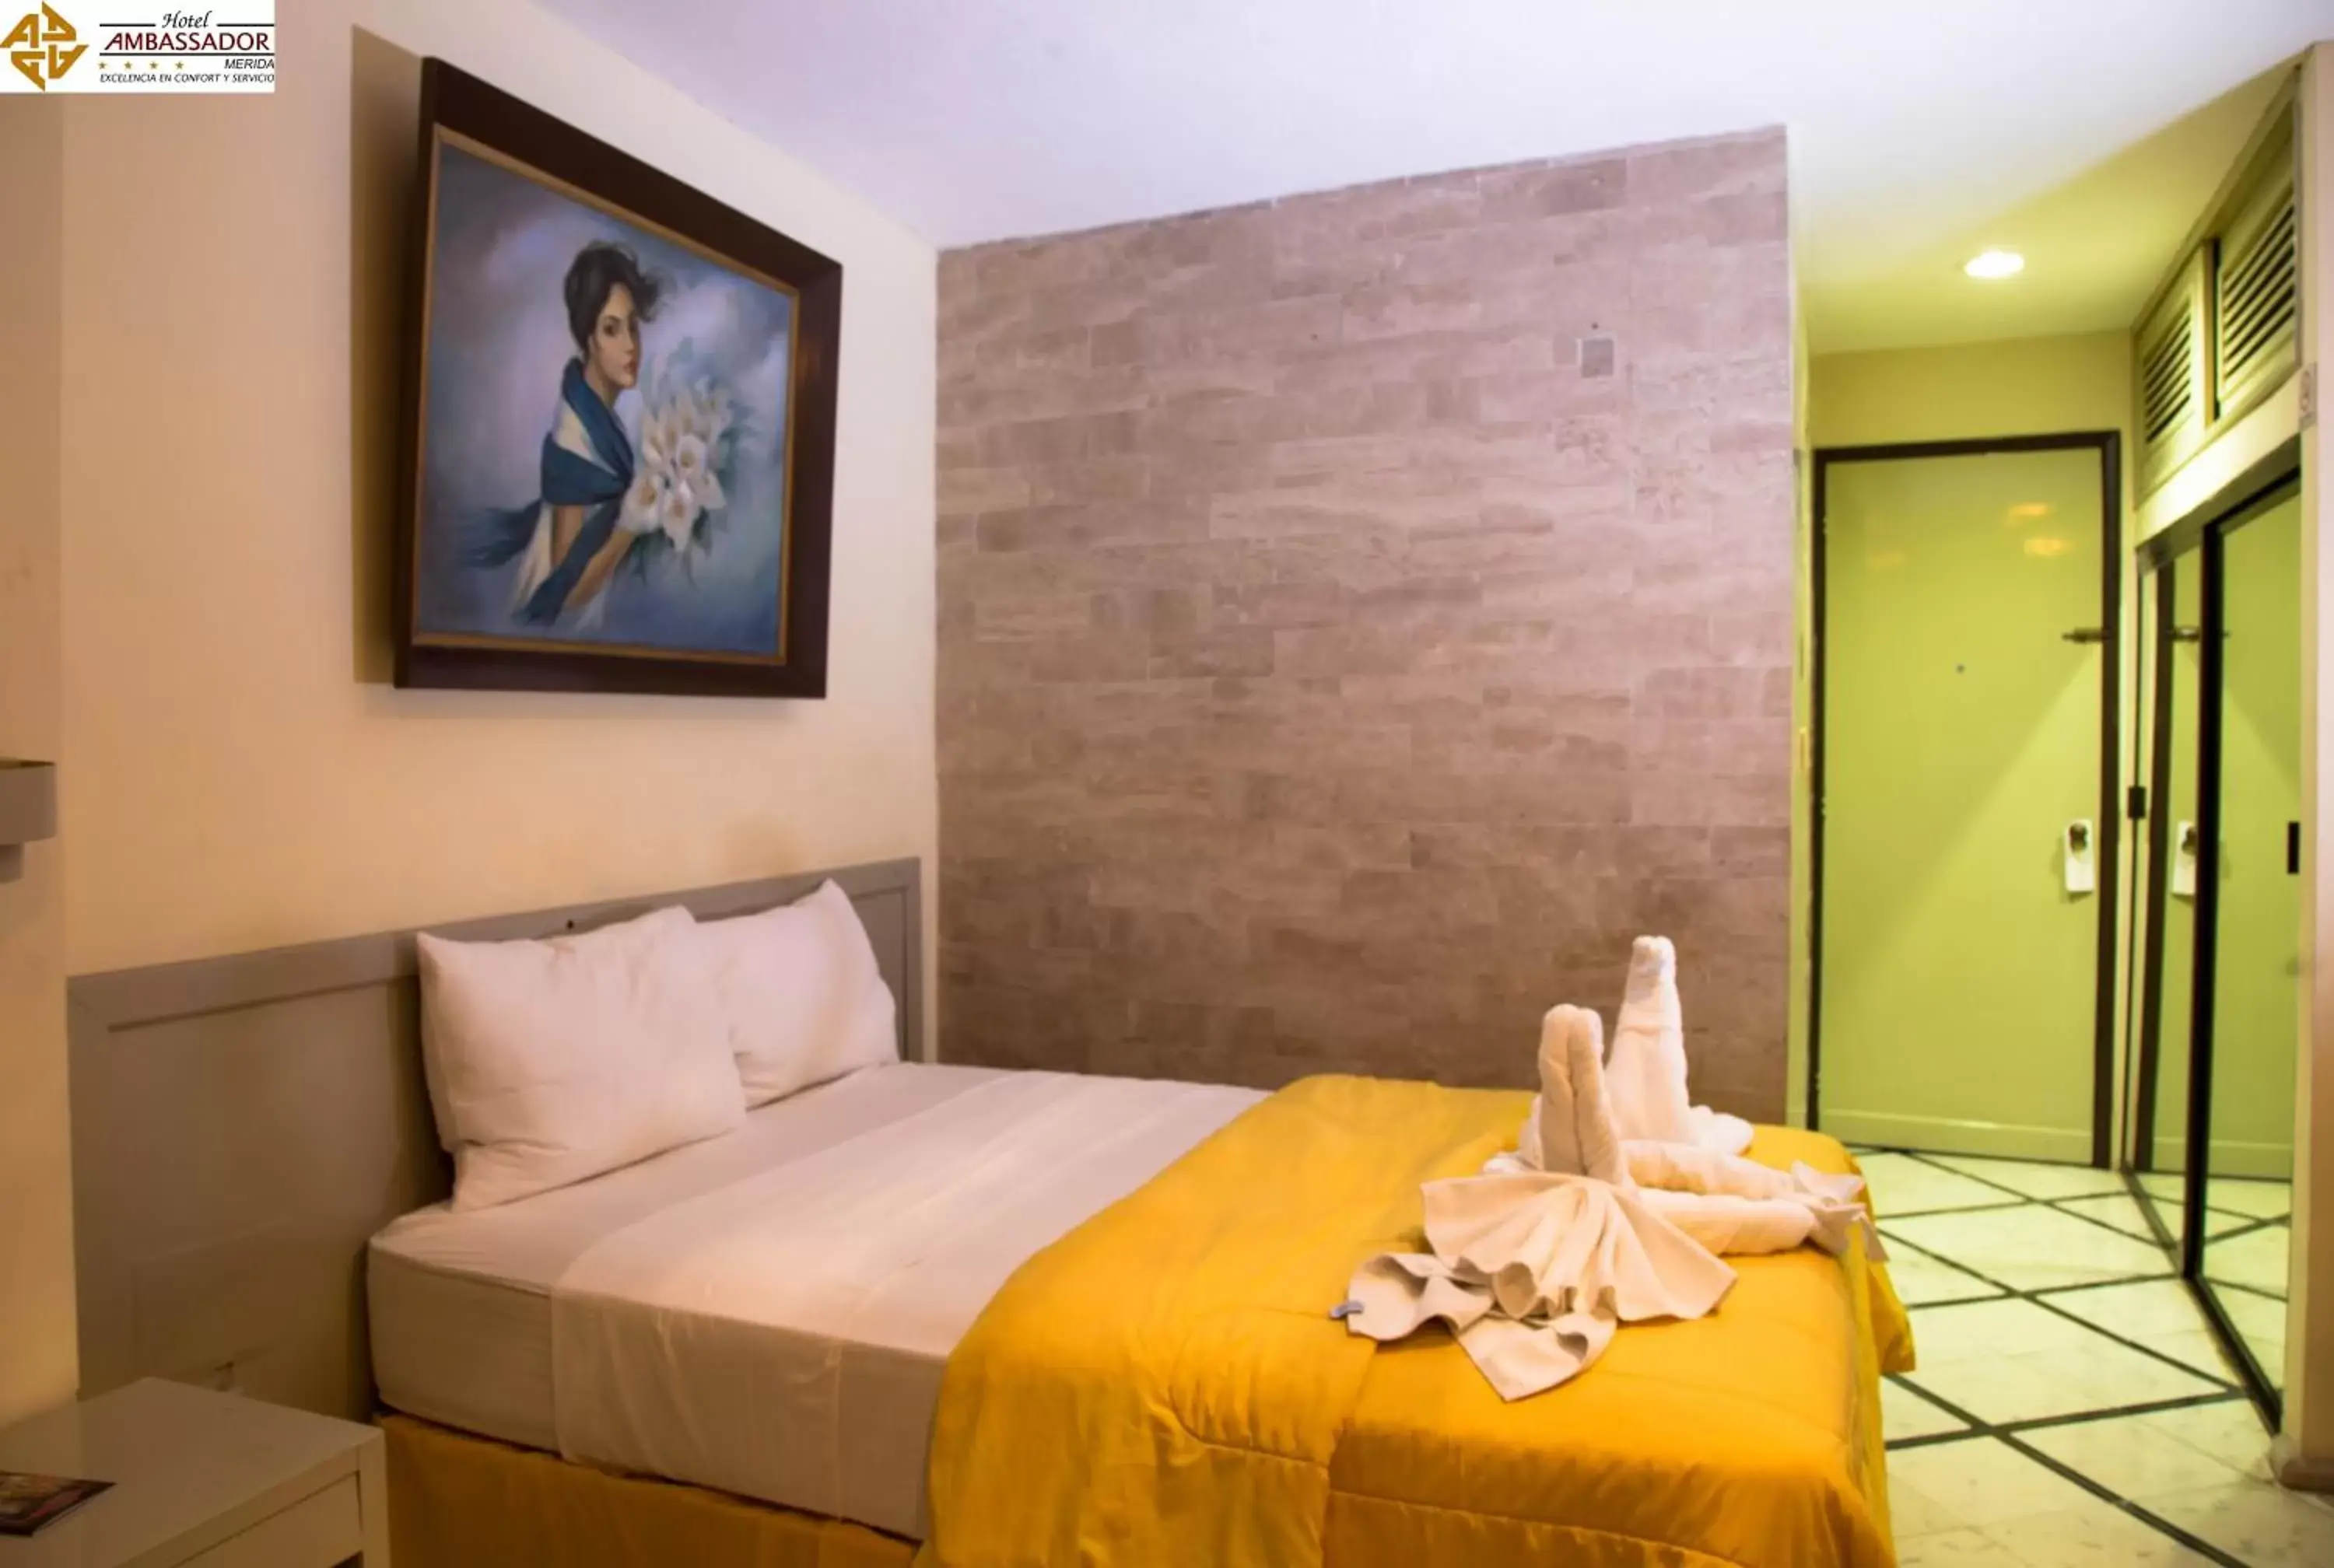 Bed, Room Photo in Hotel Ambassador Mérida